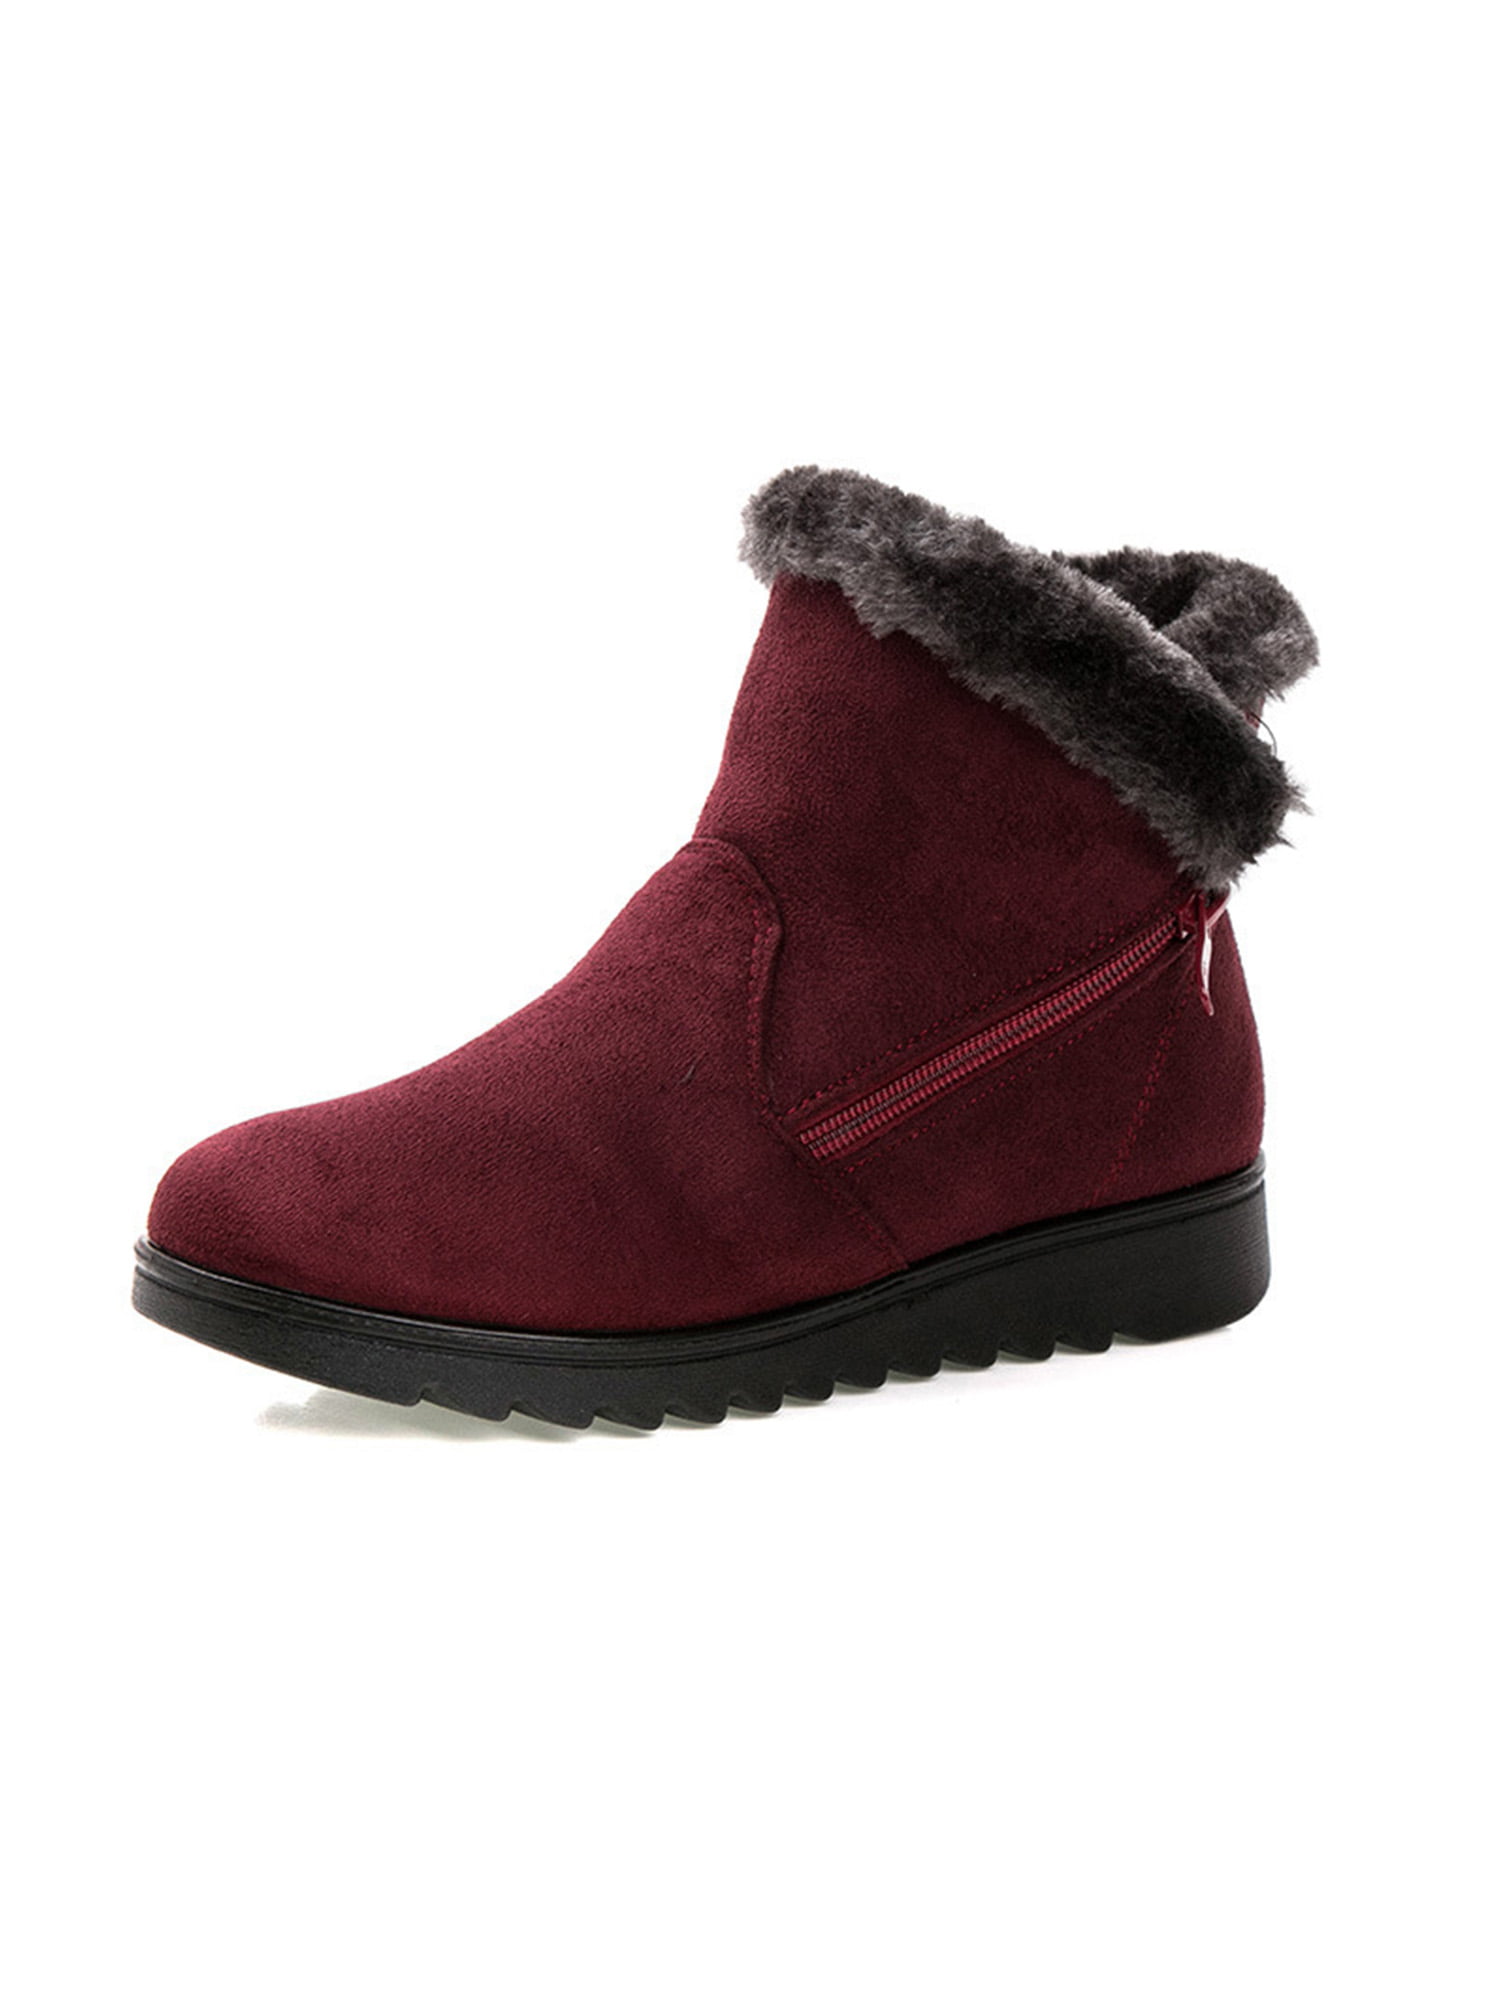 Womens Fur Winter Warm Ankle Booties Waterproof Antislip Frosty Cotton Snow Boot 